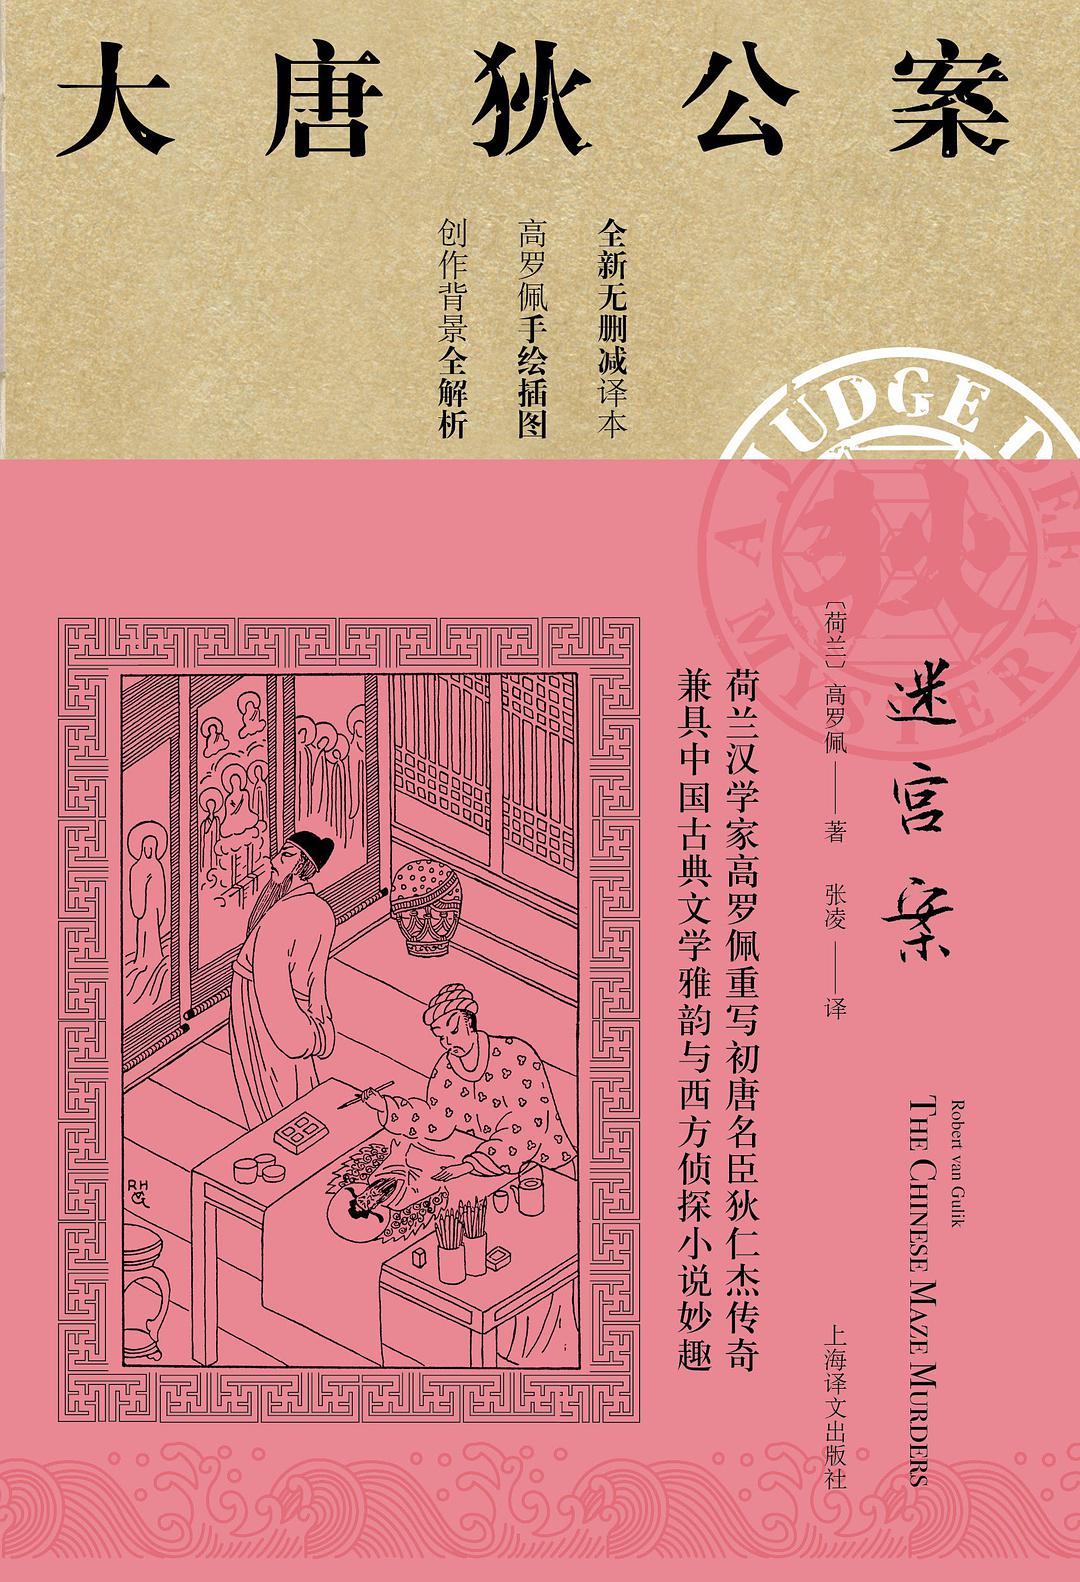 Robert van Gulik: 迷宫案 (Chinese language, 2019, 上海译文出版社)